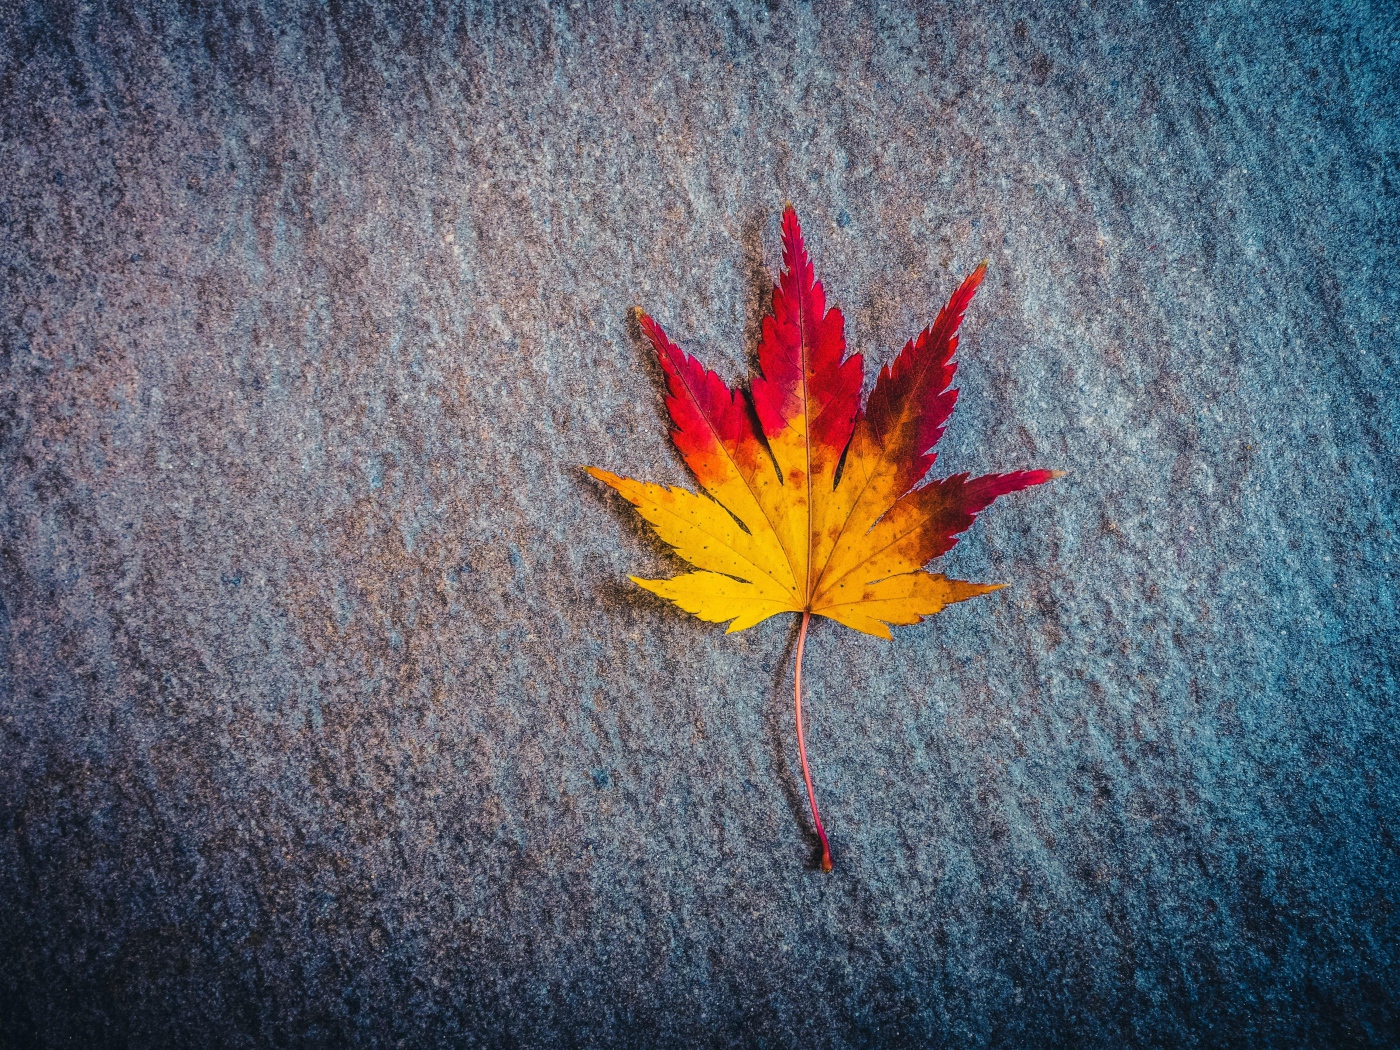 Яркий опавший лист на камне осенью 